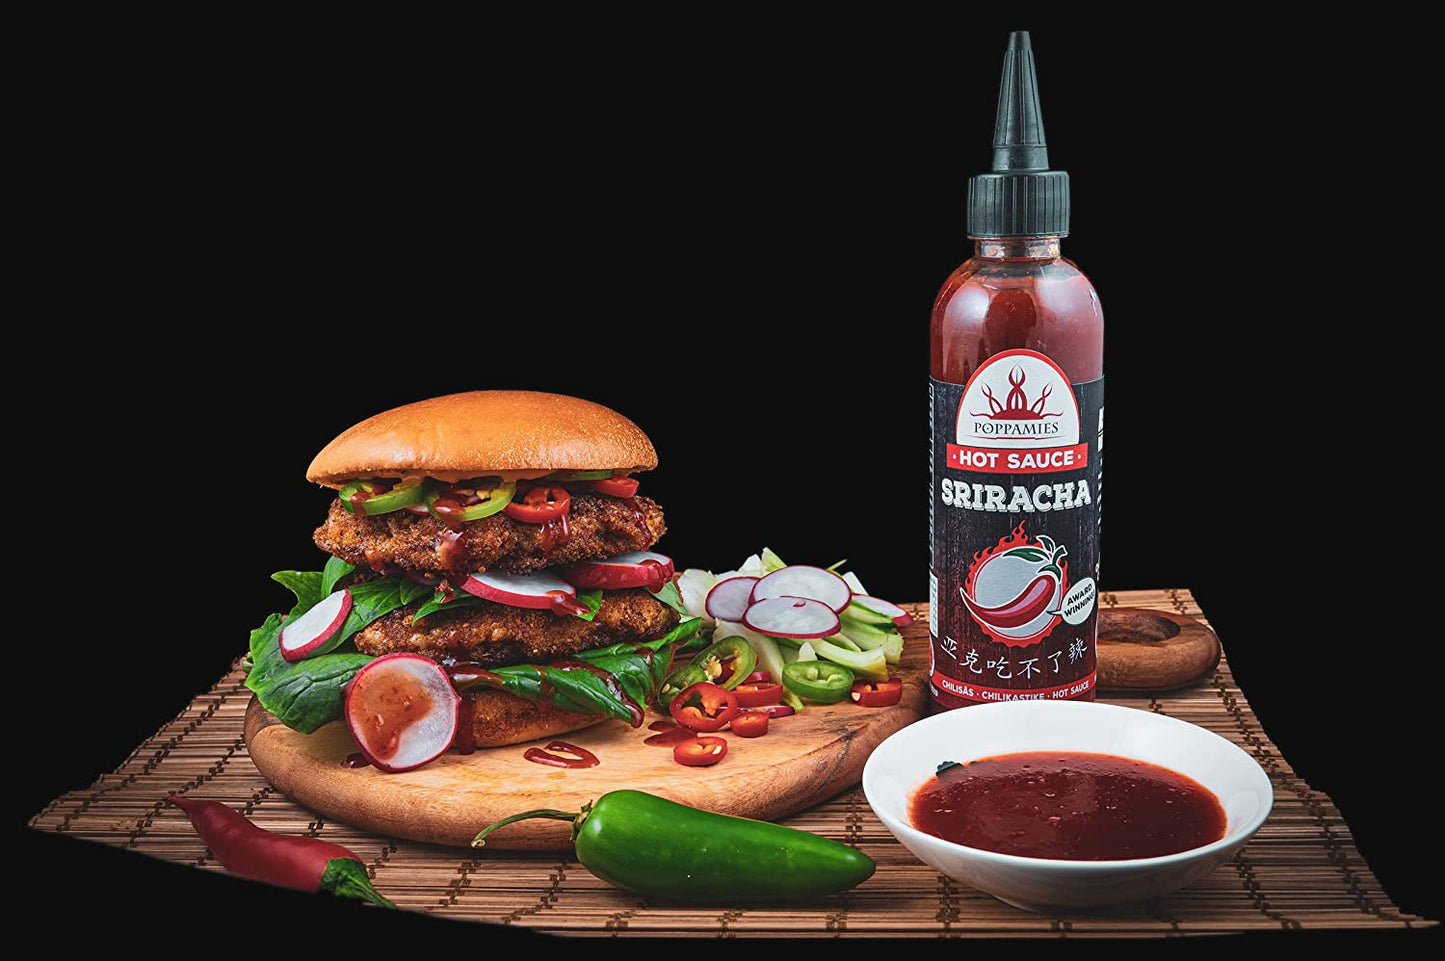 Poppamies Sriracha Hot Sauce - International Flavor Awards 2019 - Winner Sauce - Gluten Free Lactose Free Vegan - Spiciness: 4/10 - 275g - Lukata LTD